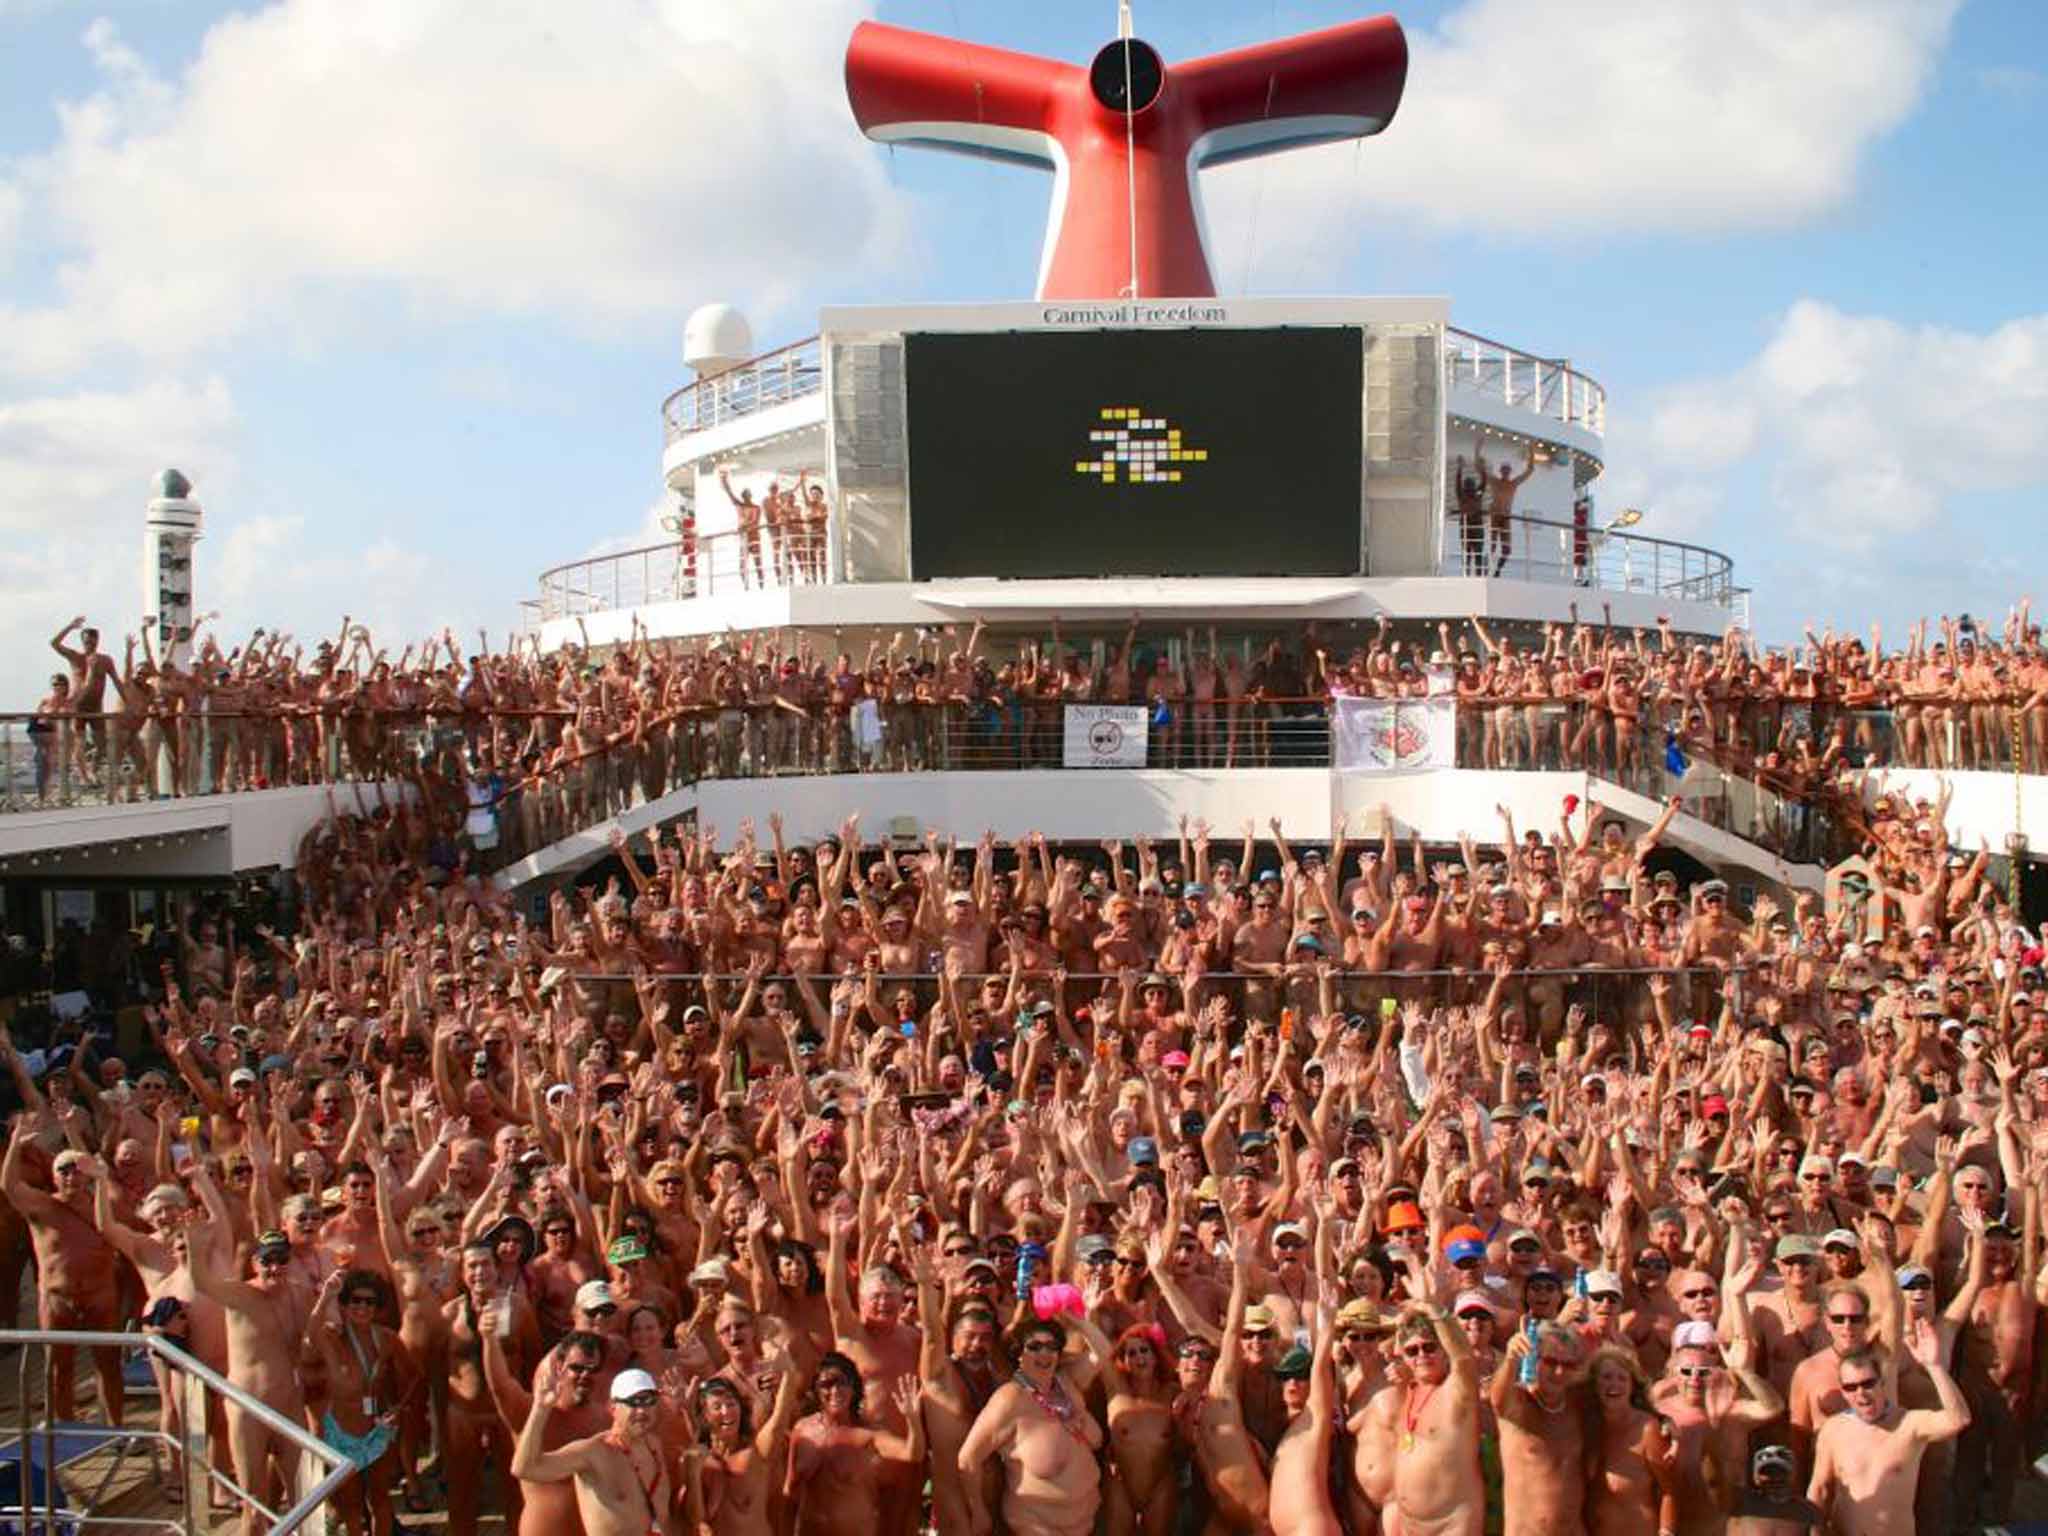 Nude woman on cruise ship-nude pics